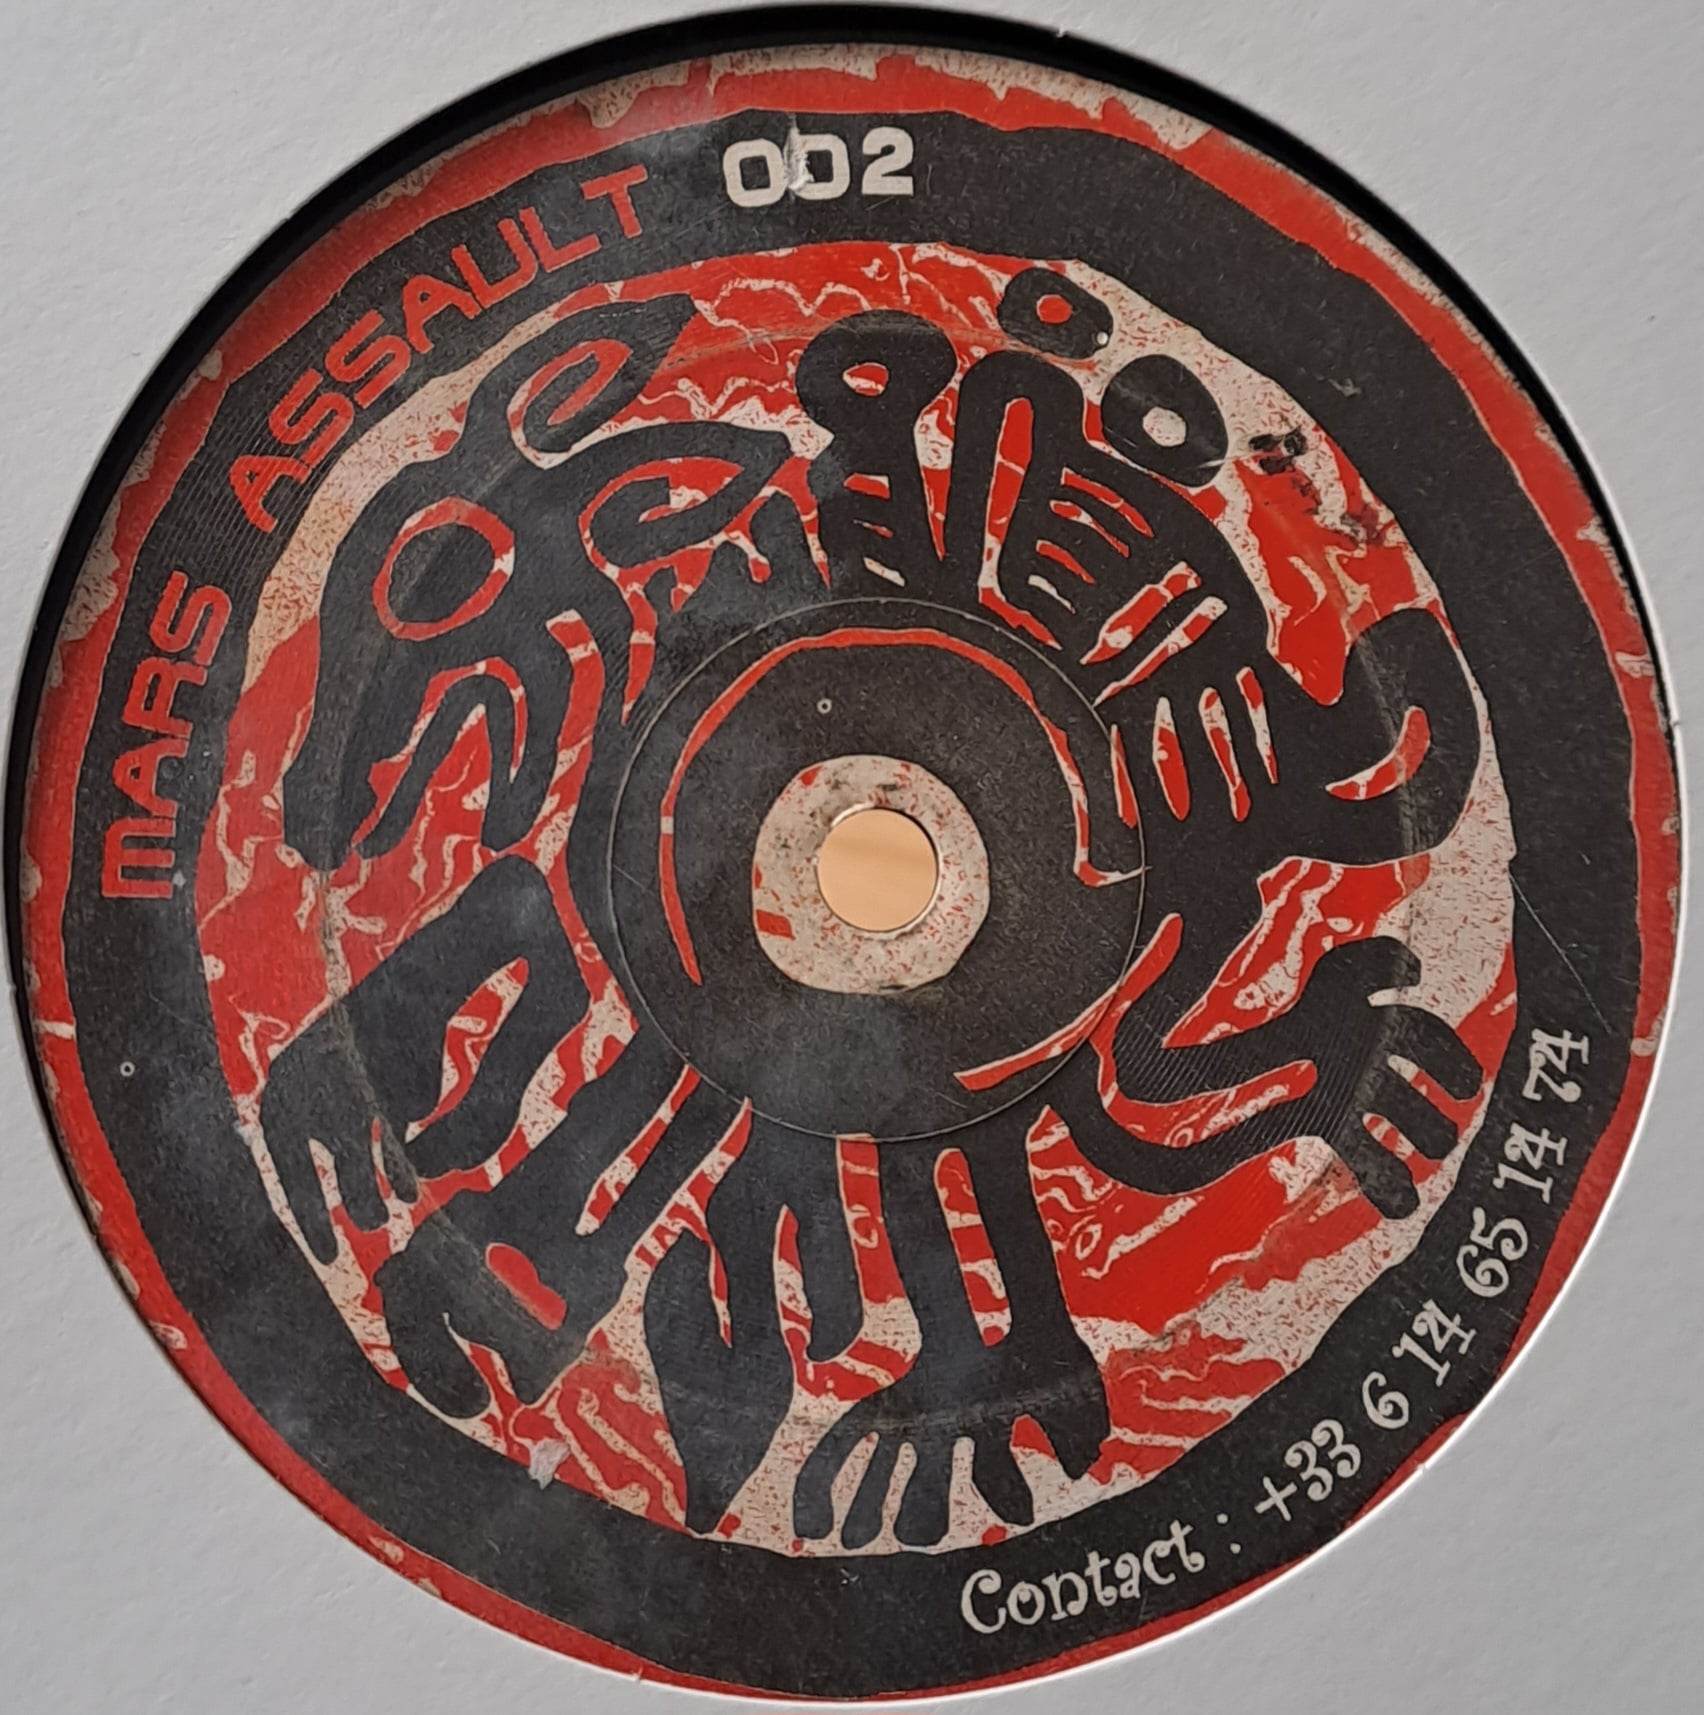 Mars Assault 02 - vinyle freetekno